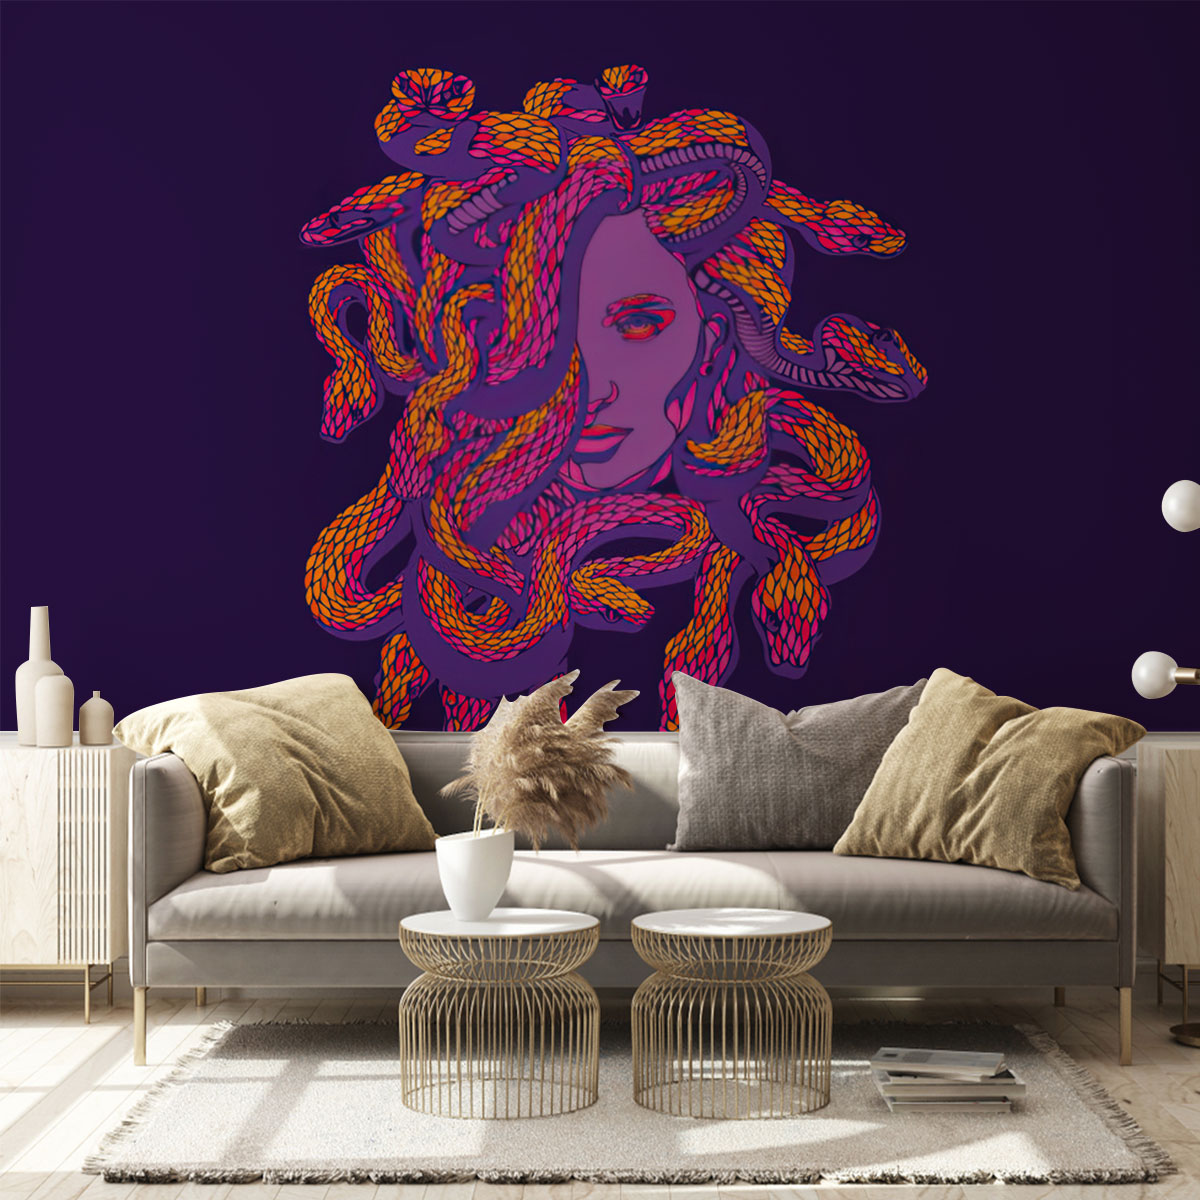 Hot Medusa Wall Mural_2_1